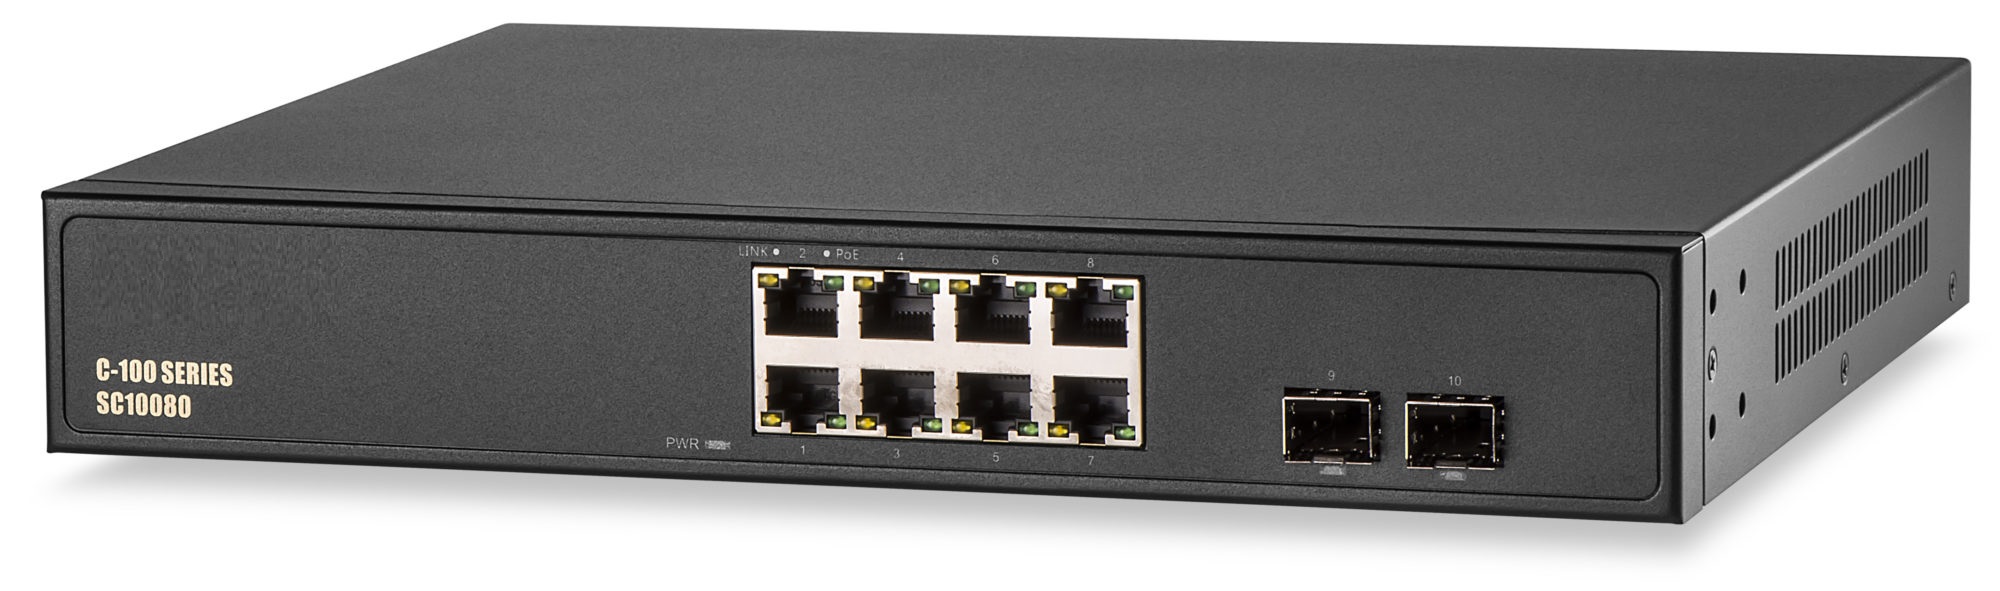 Plug and Play PoE/PoE 8 Port Gigabit Switch 125W 2 Gigabit Ethernet Uplink Port Switch for CCTV 